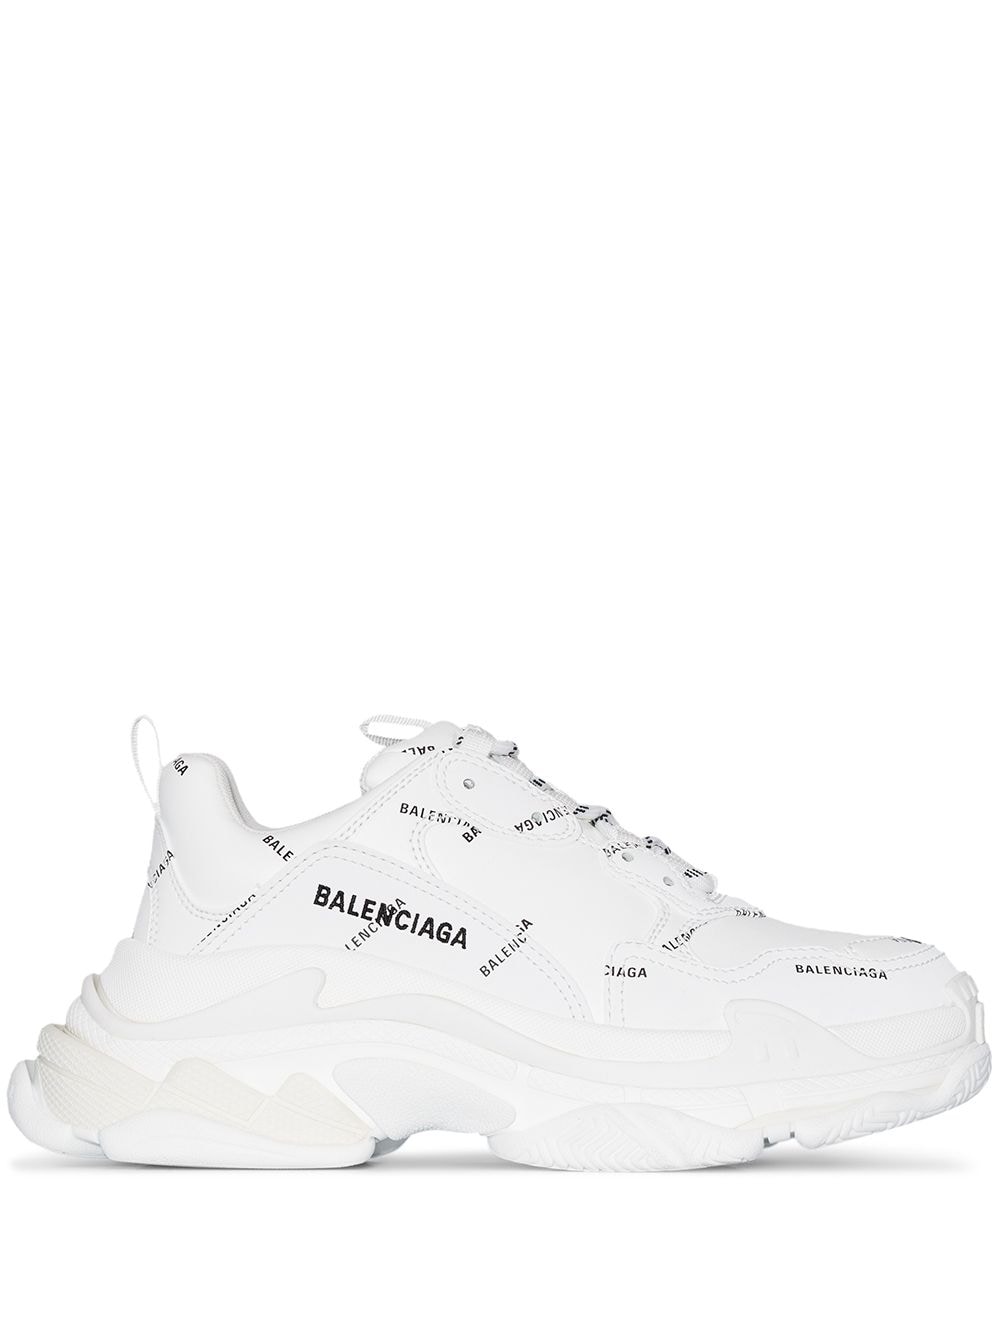 Triple S Sneakers дамски обувки Balenciaga 848565105_39